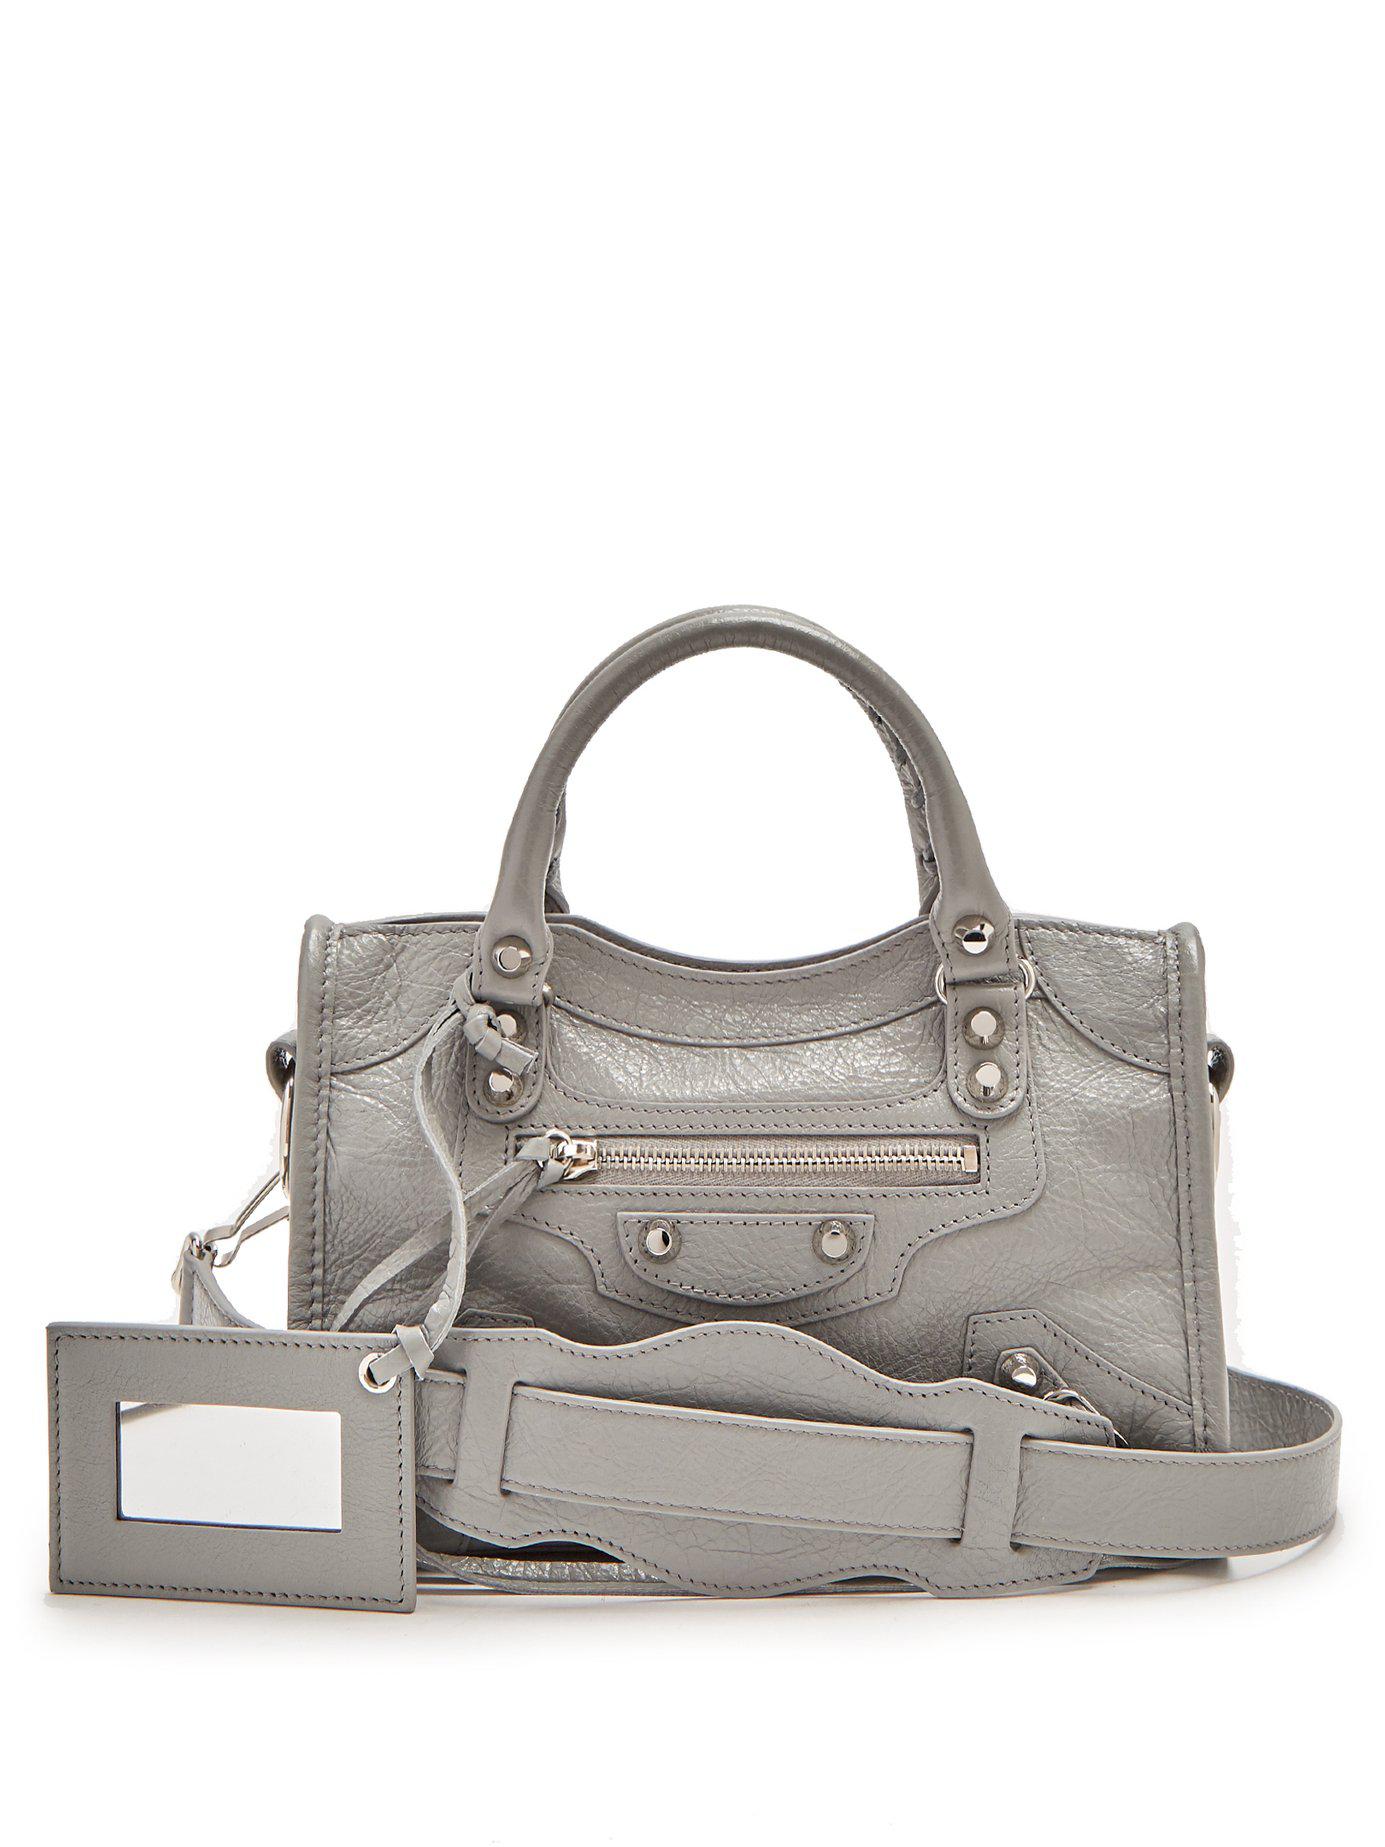 Balenciaga Classic Metallic Edge City Xs Bag in Gray | Lyst